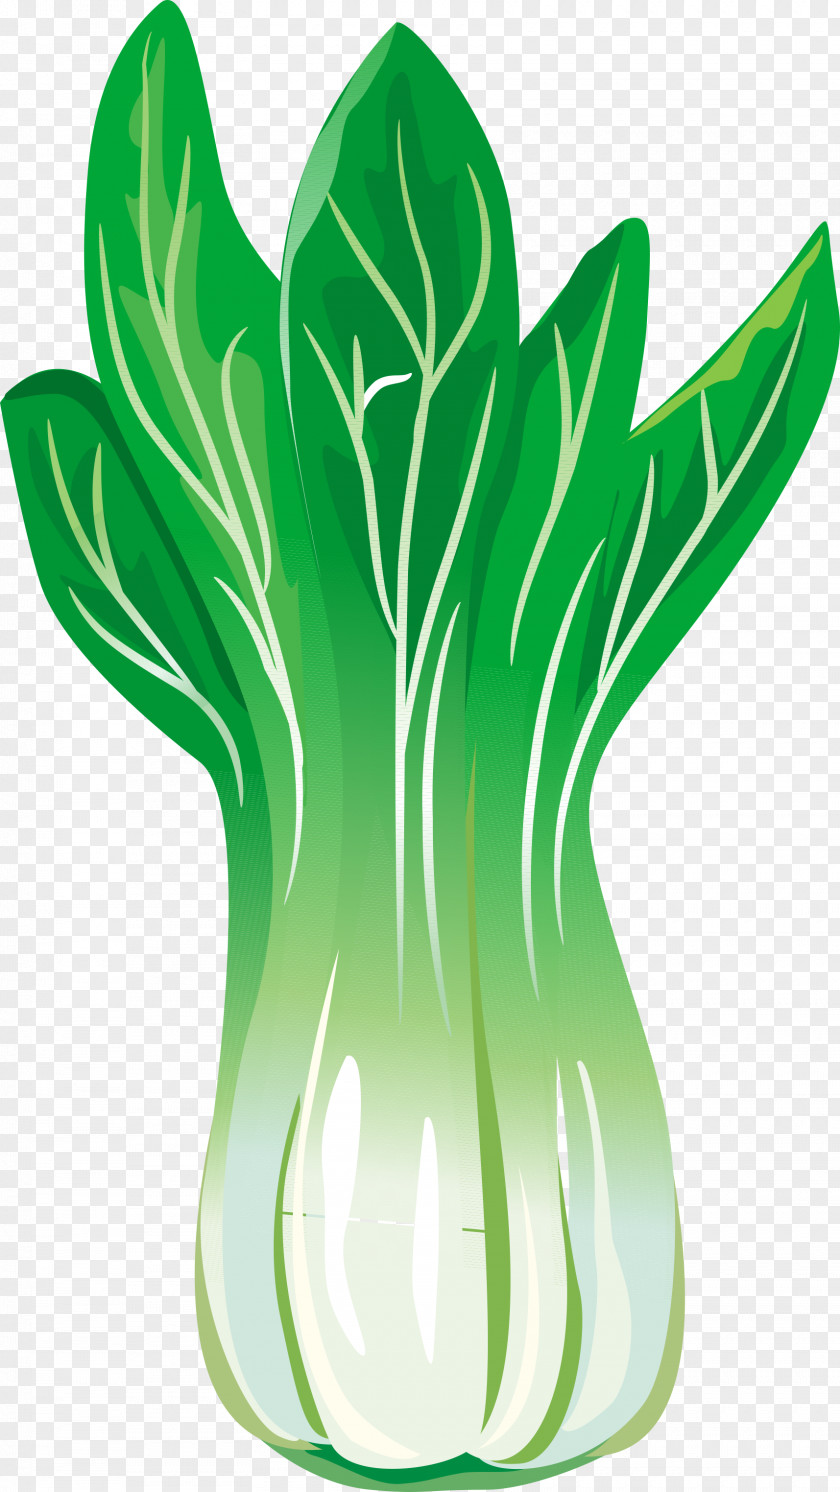 Green Vegetables Chinese Cabbage Leaf Vegetable PNG